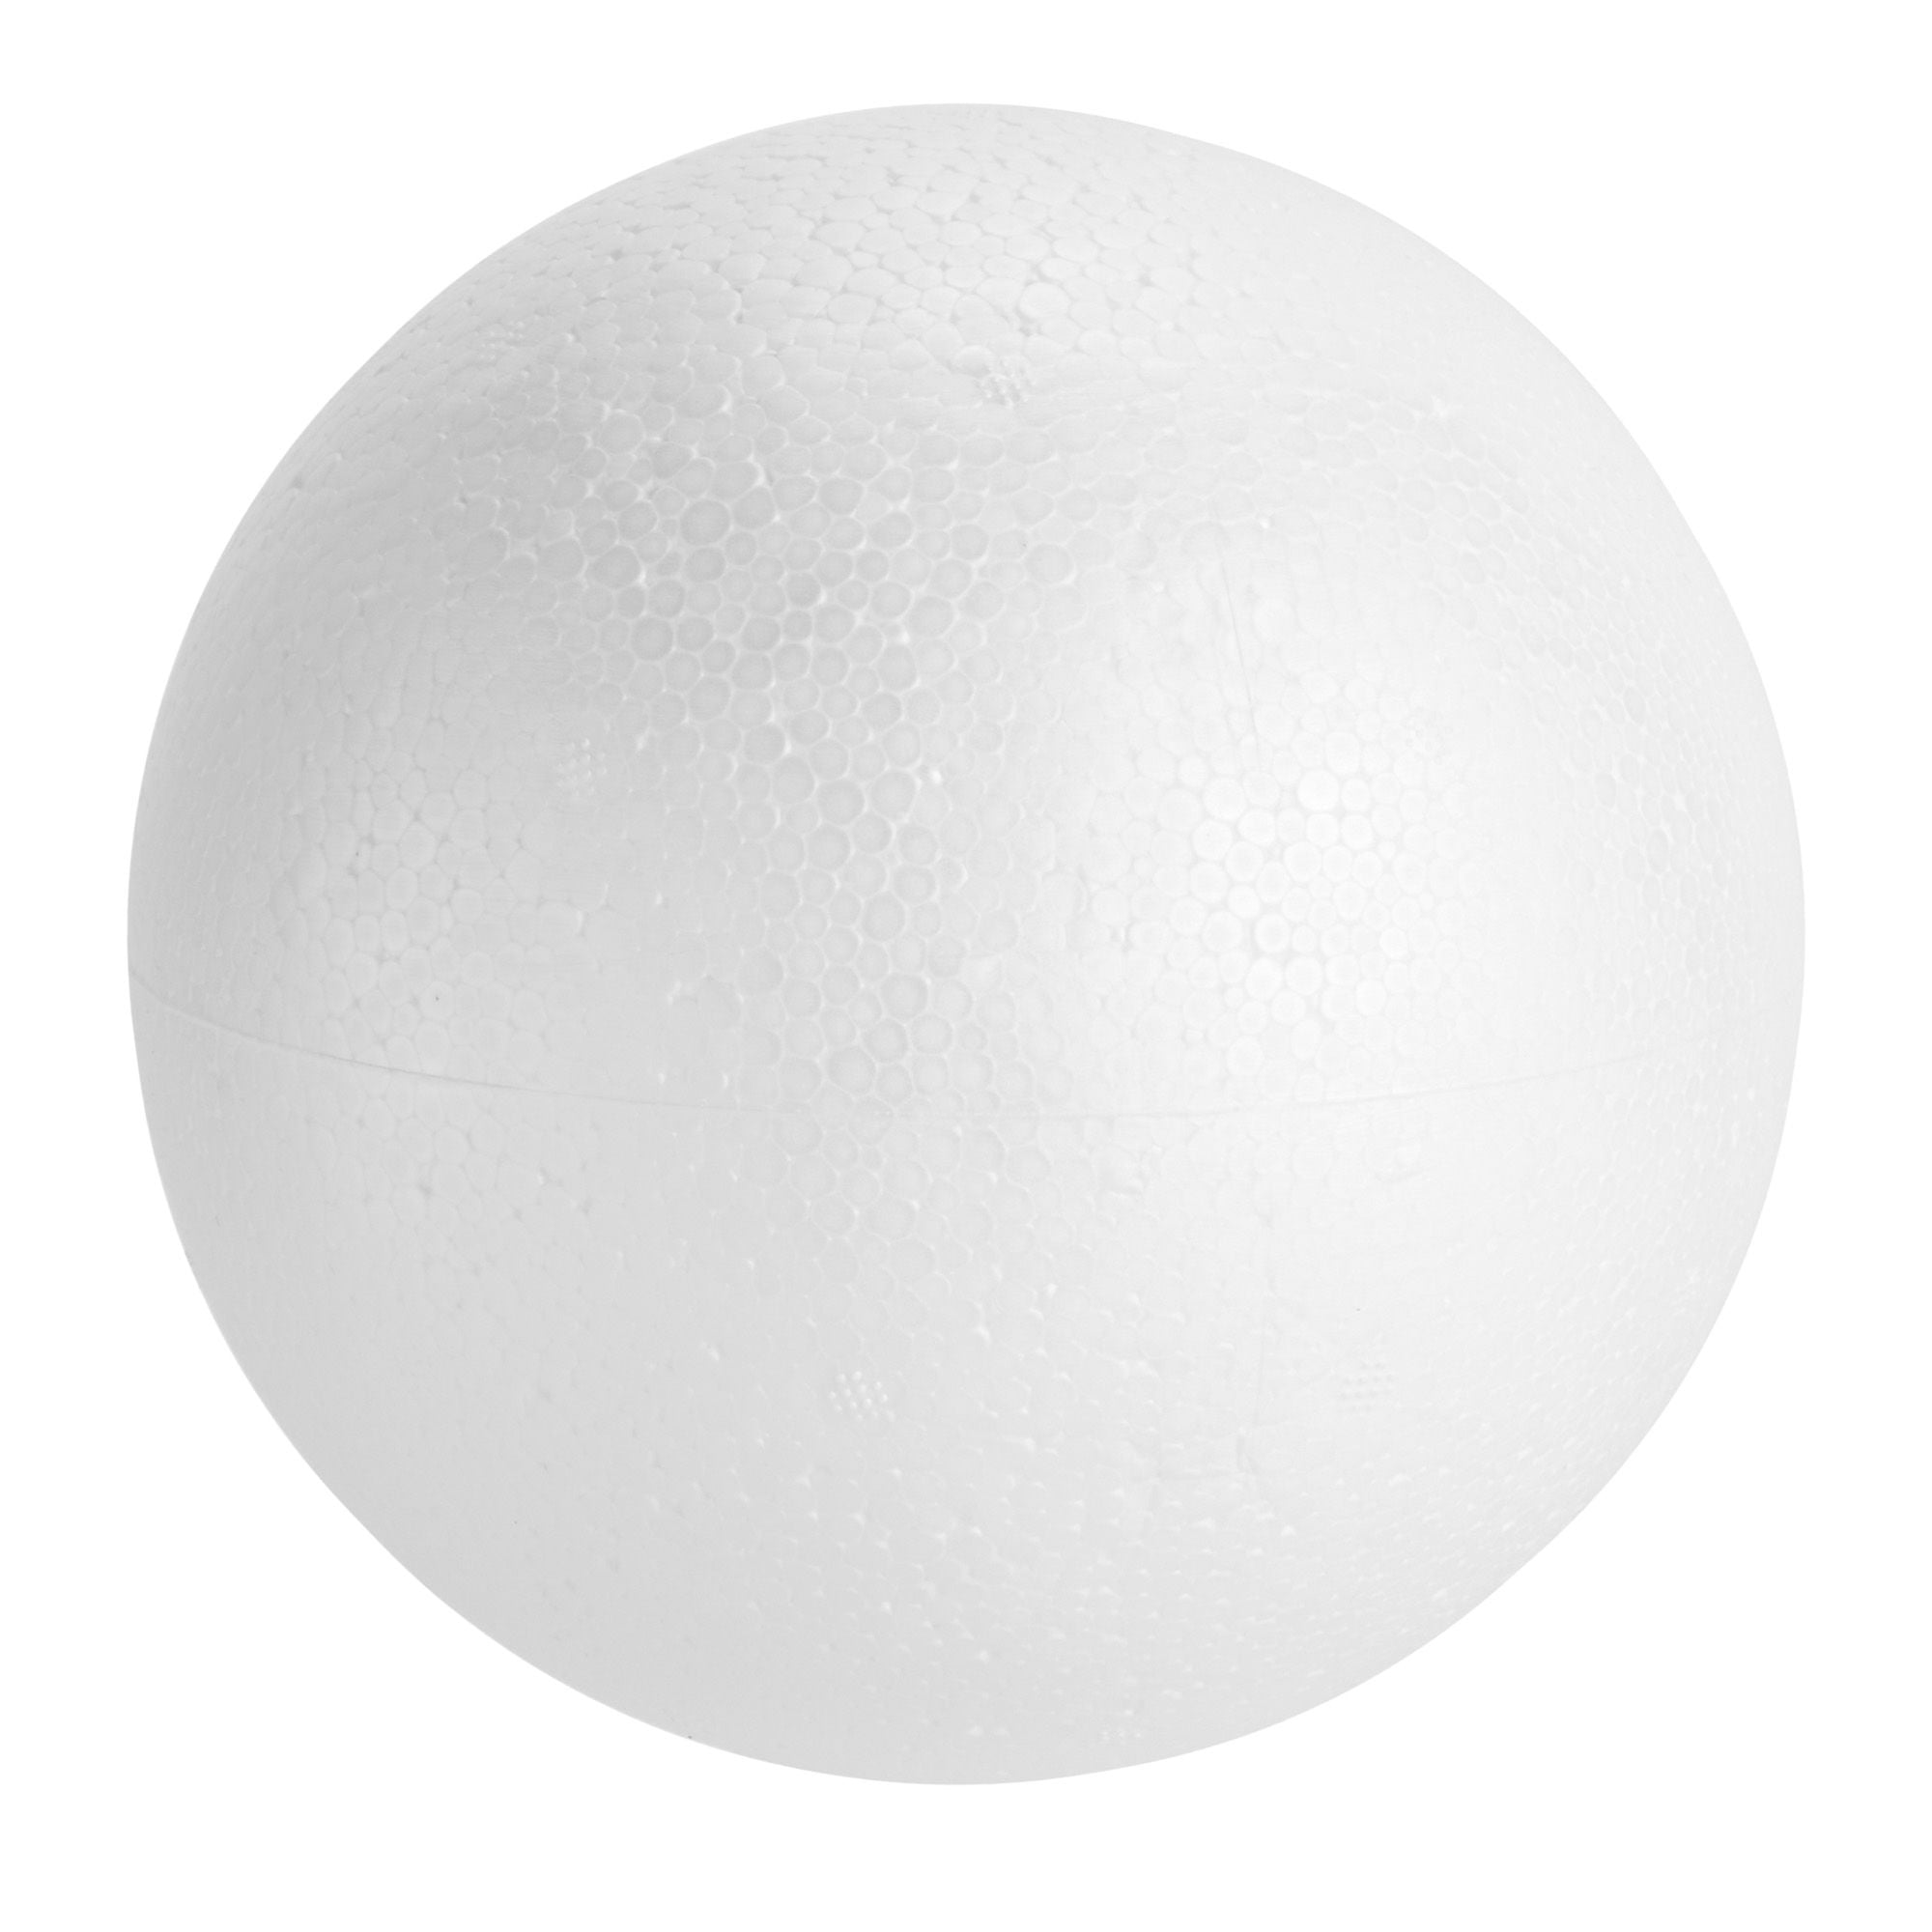 Purchase Wholesale foam balls. Free Returns & Net 60 Terms on Faire